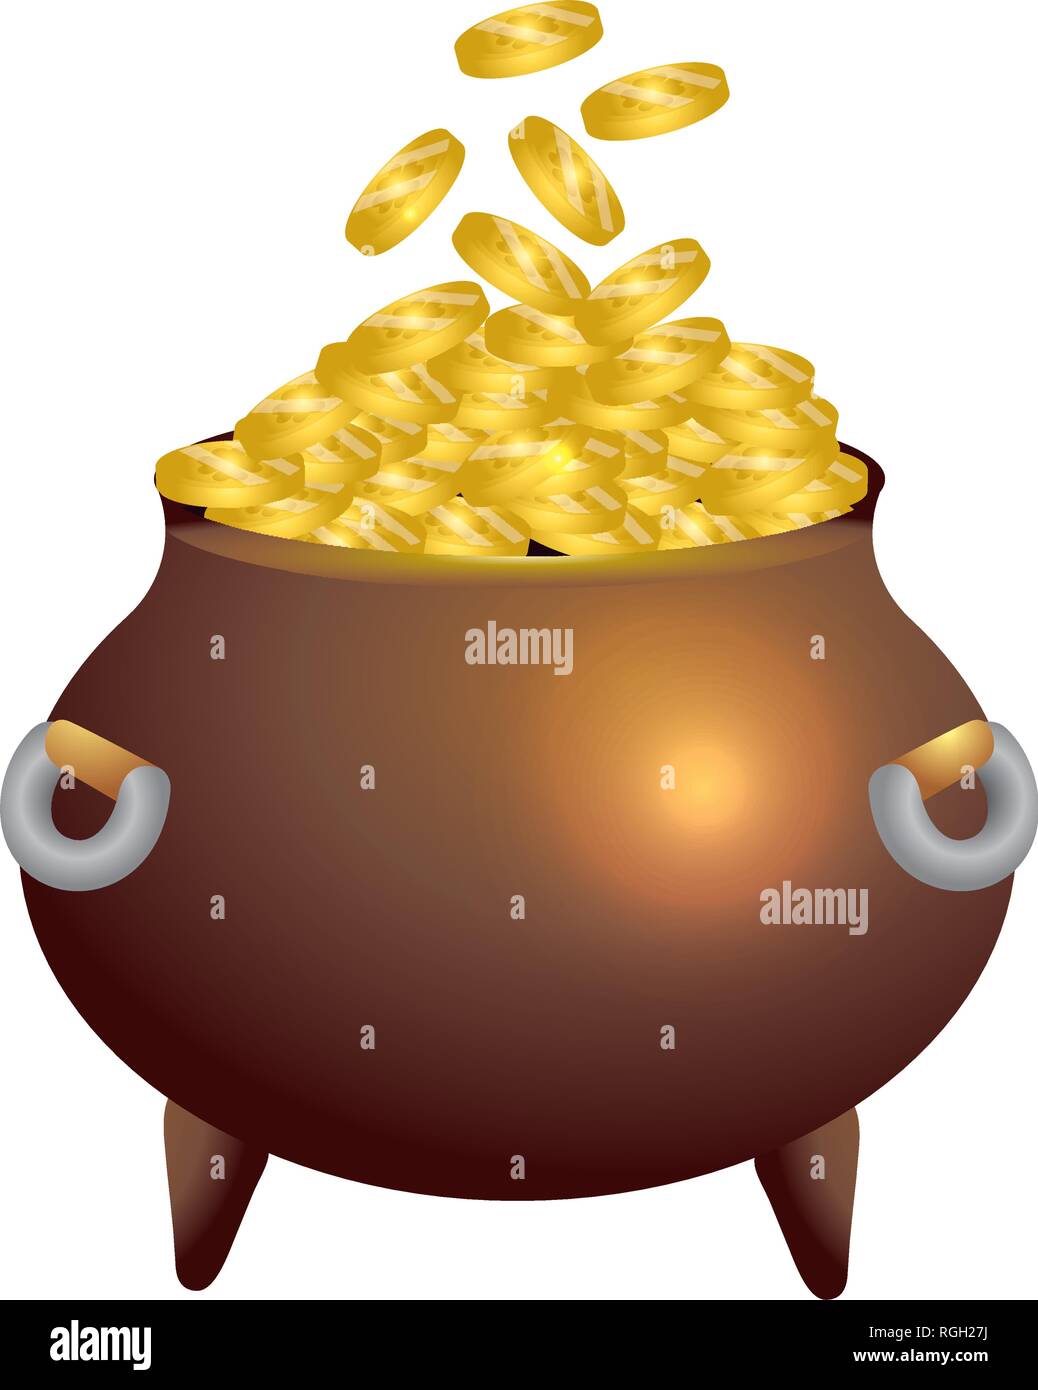 Topf Gold Reichtum Stock-Vektorgrafik - Alamy